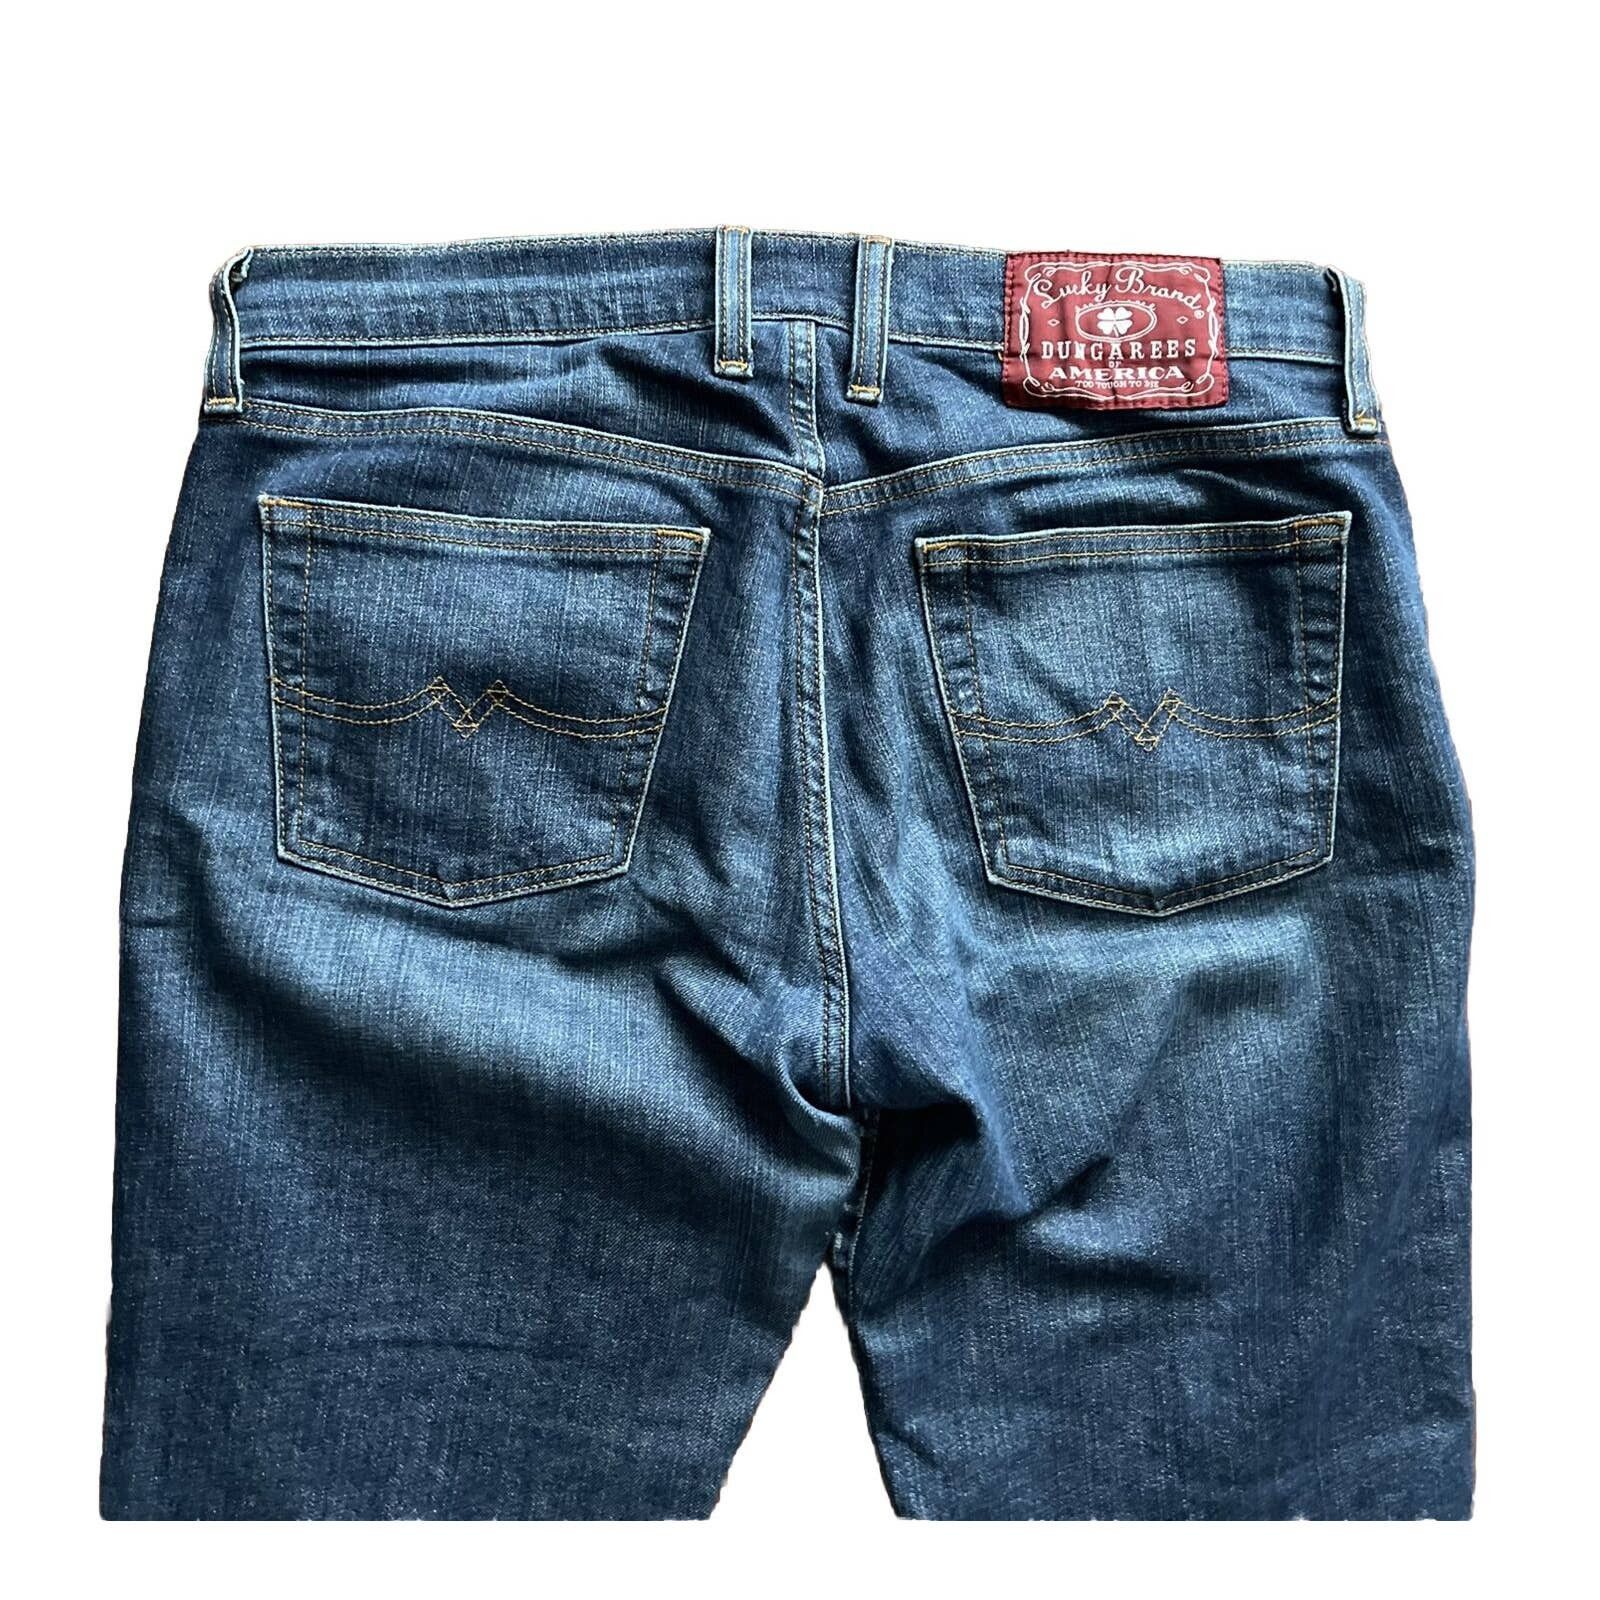 Lucky Brand By Gene Montesano Jeans, Size 10x30